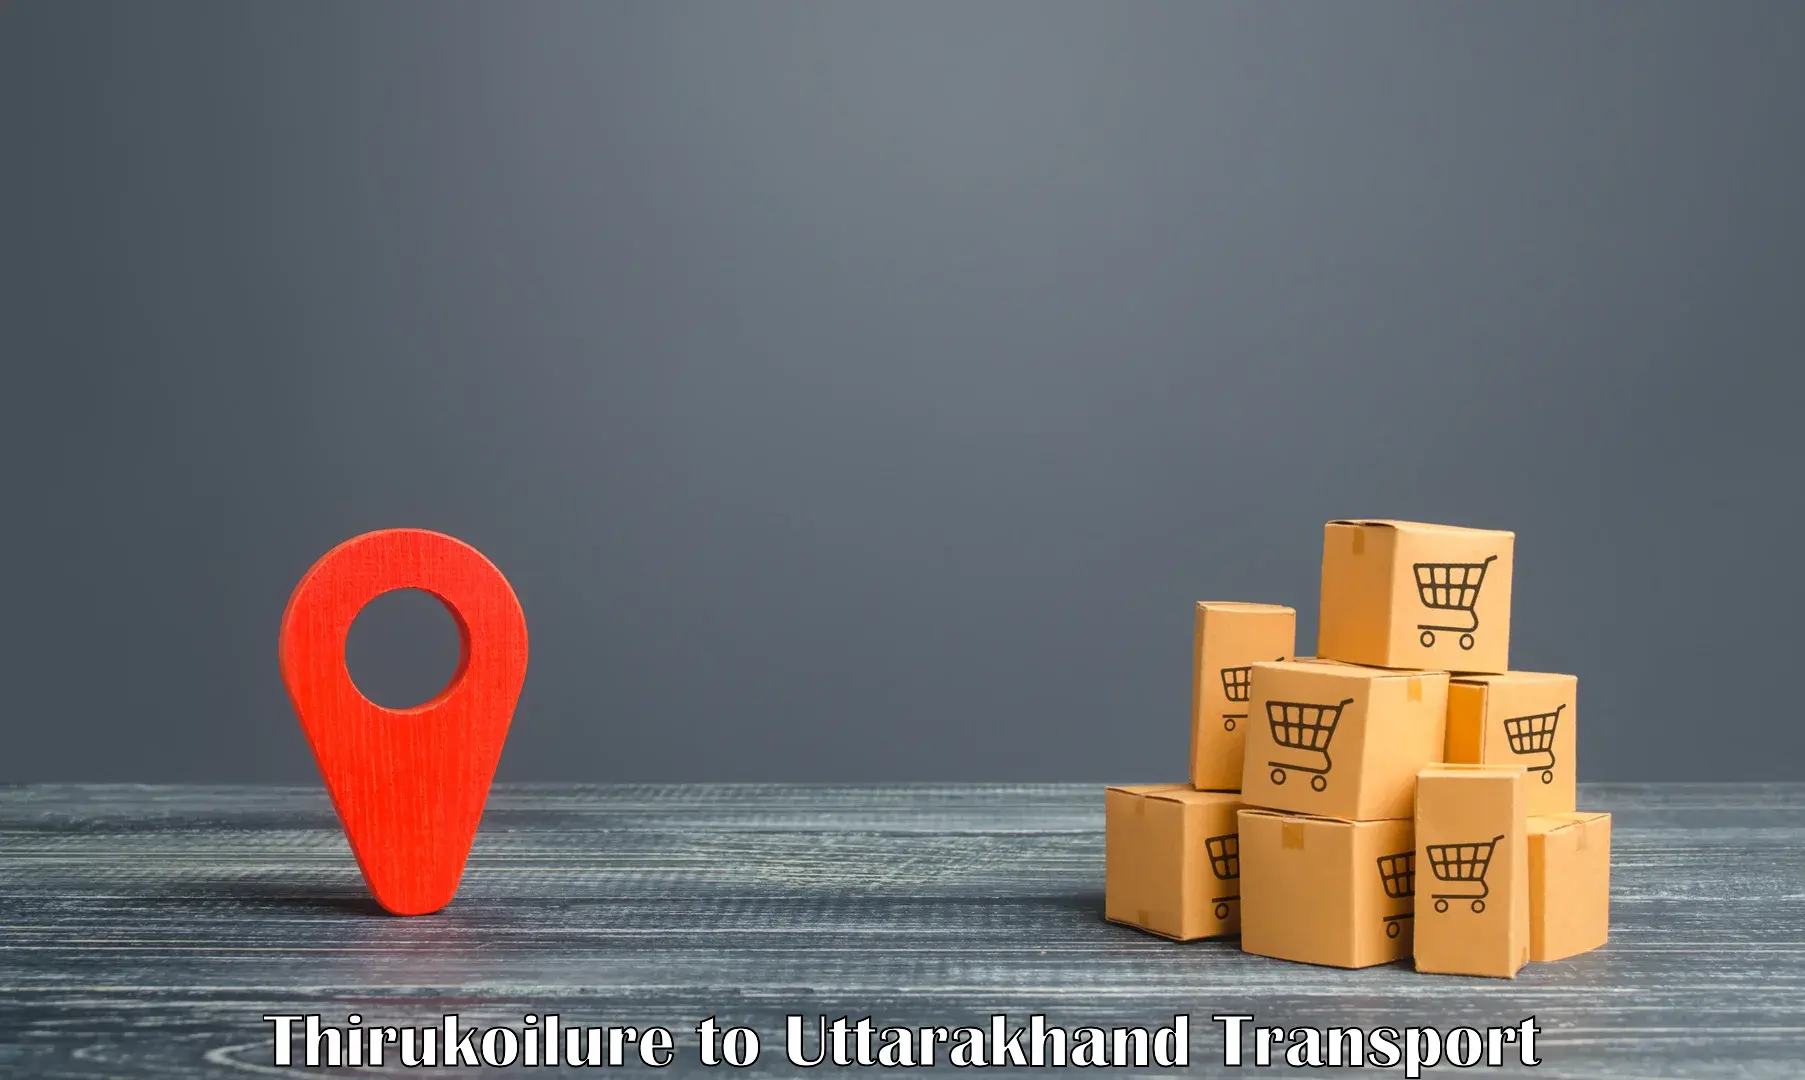 Online transport Thirukoilure to Mussoorie